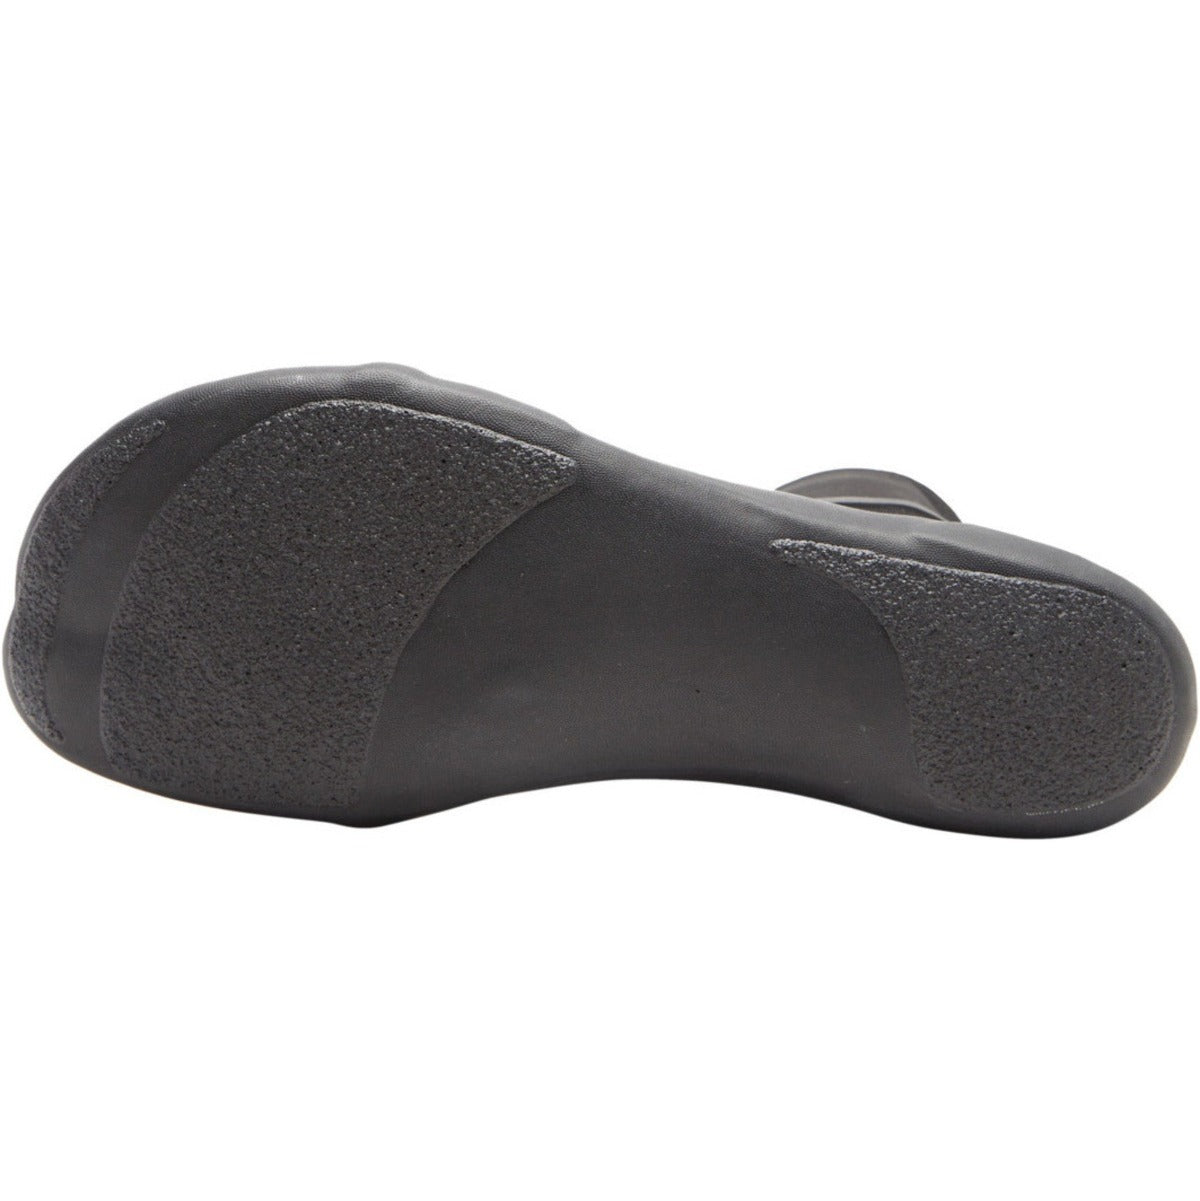 billabong-absolute-split-toe-boot-5mm-black-hash-galway-ireland-blacksheepsurfco-sole